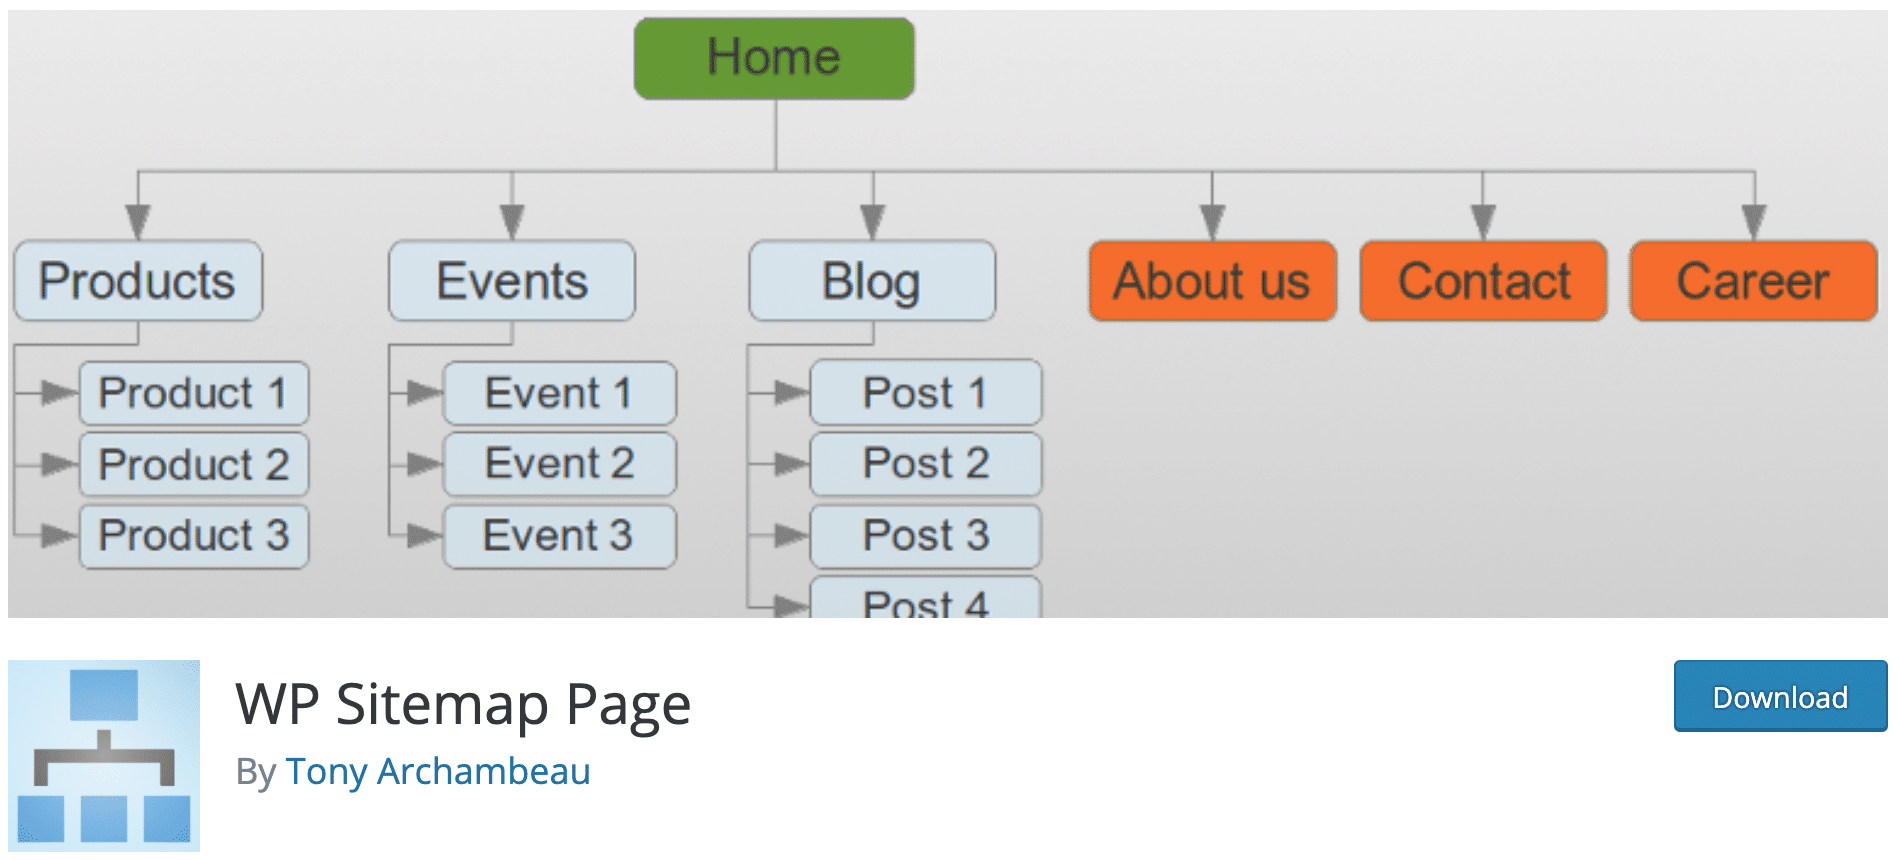 WP Sitemap Page plugin to download on WordPress.